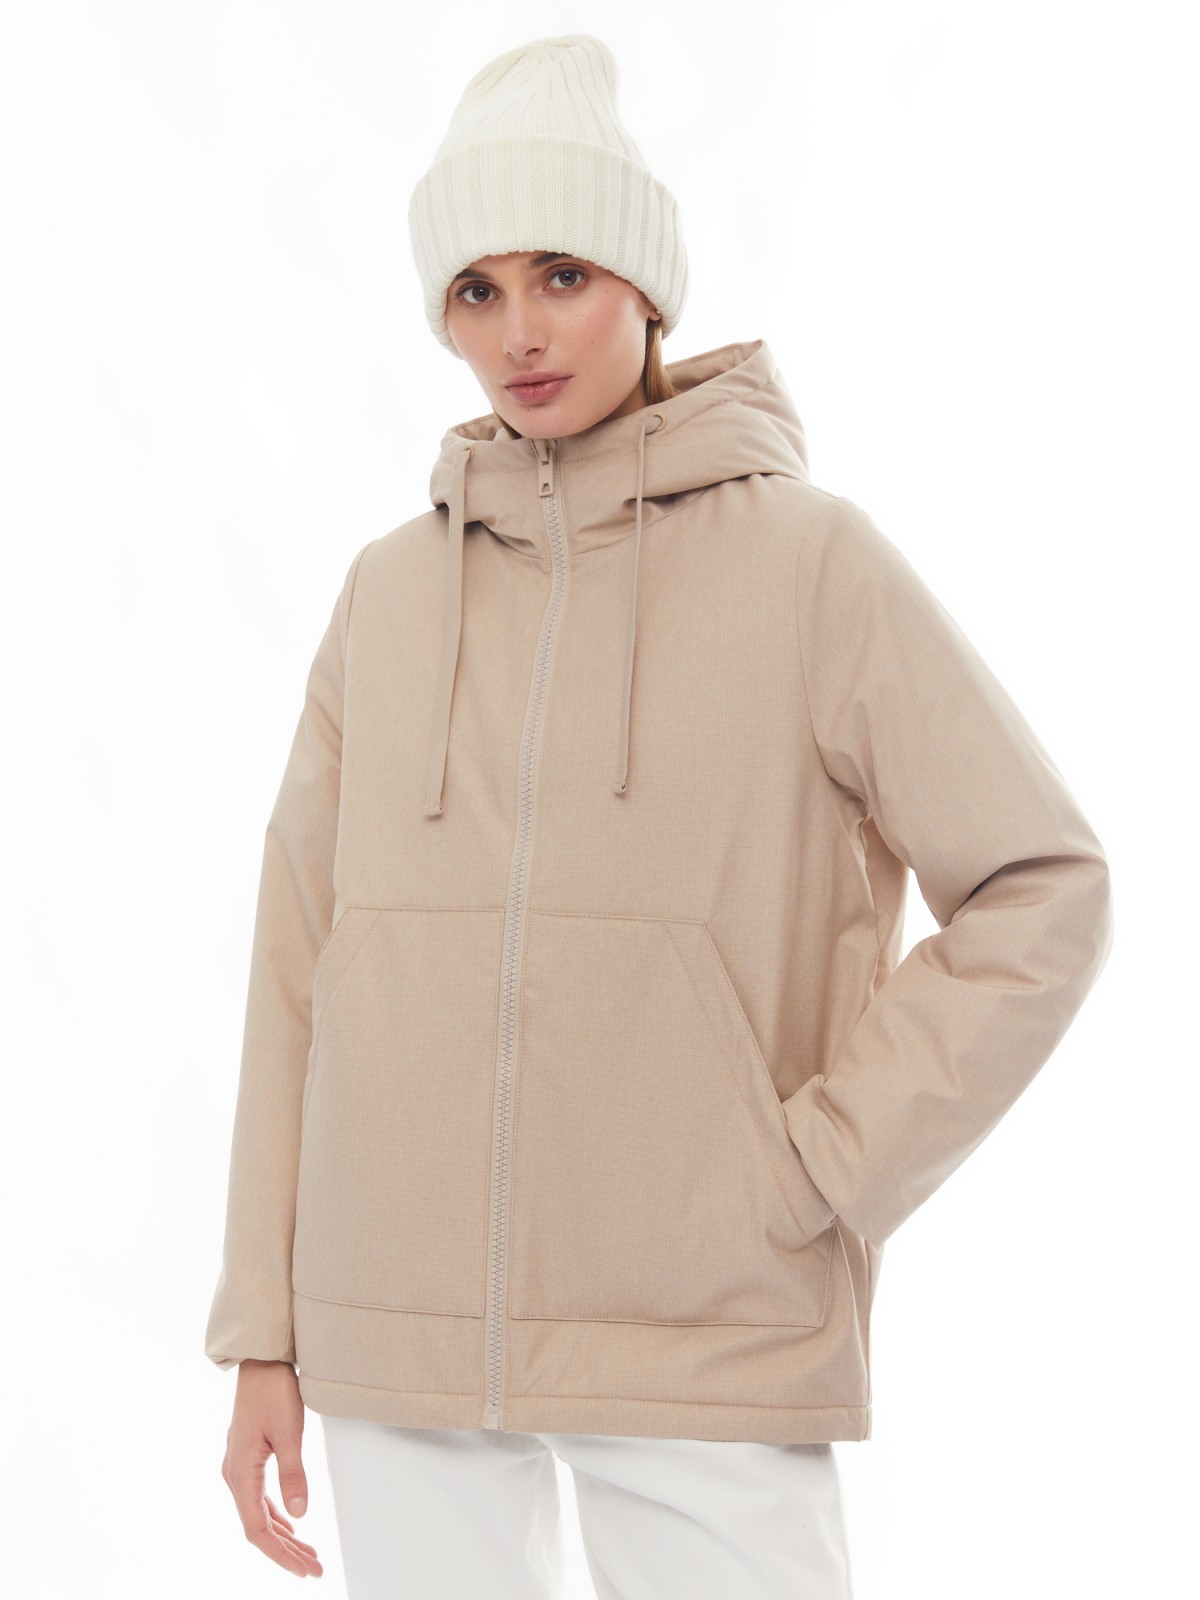 Утеплённая куртка-парка на молнии с капюшоном zolla 024125102124, цвет молоко, размер XS - фото 3